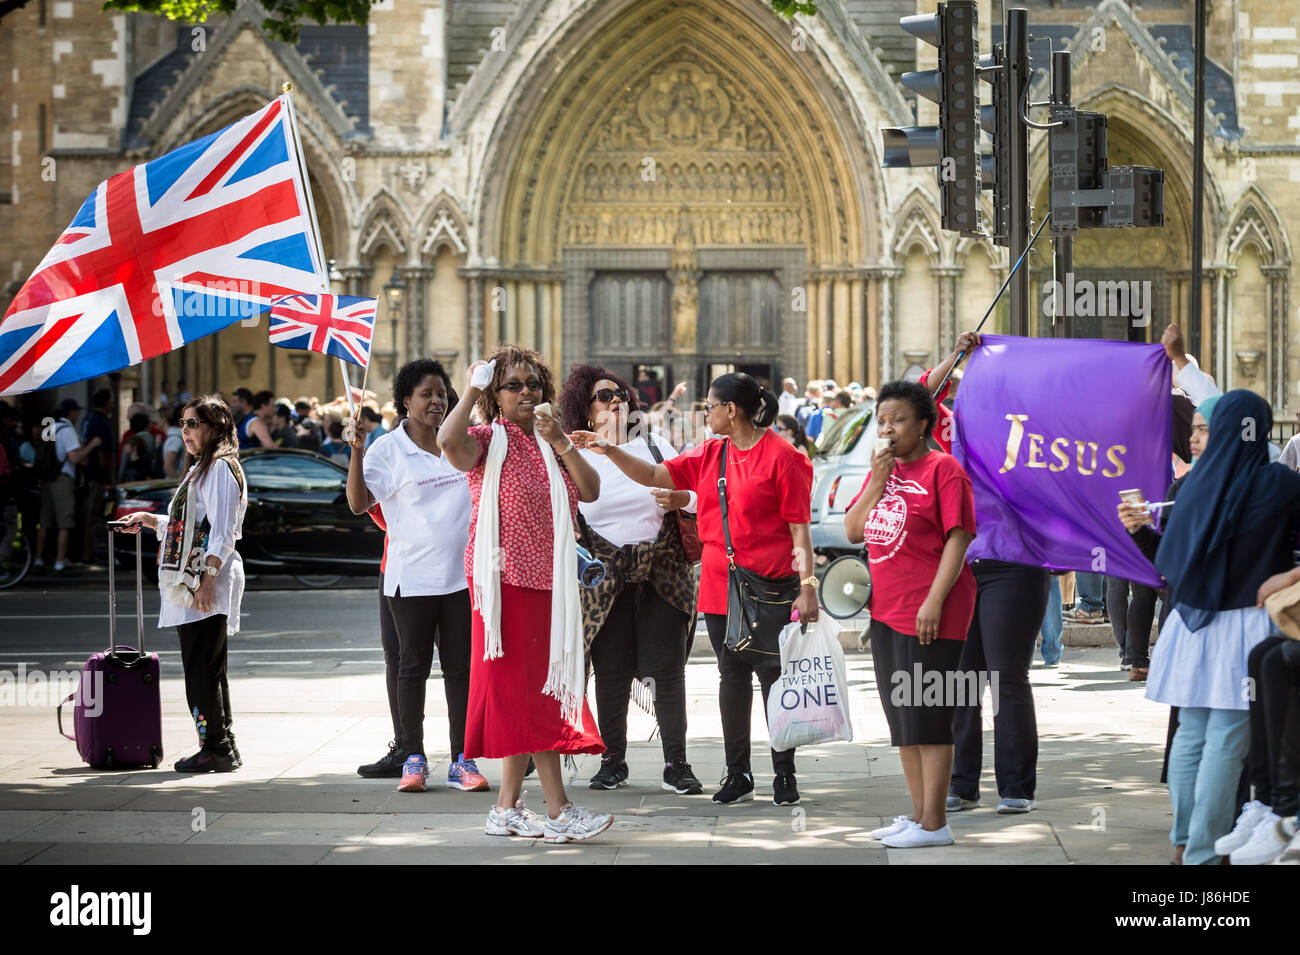 London, UK. 27. Mai 2017. Christliche Bewegung "Jammern Frauen weltweit" Rallye im Parlament Square Credit: Guy Corbishley/Alamy Live News Stockfoto